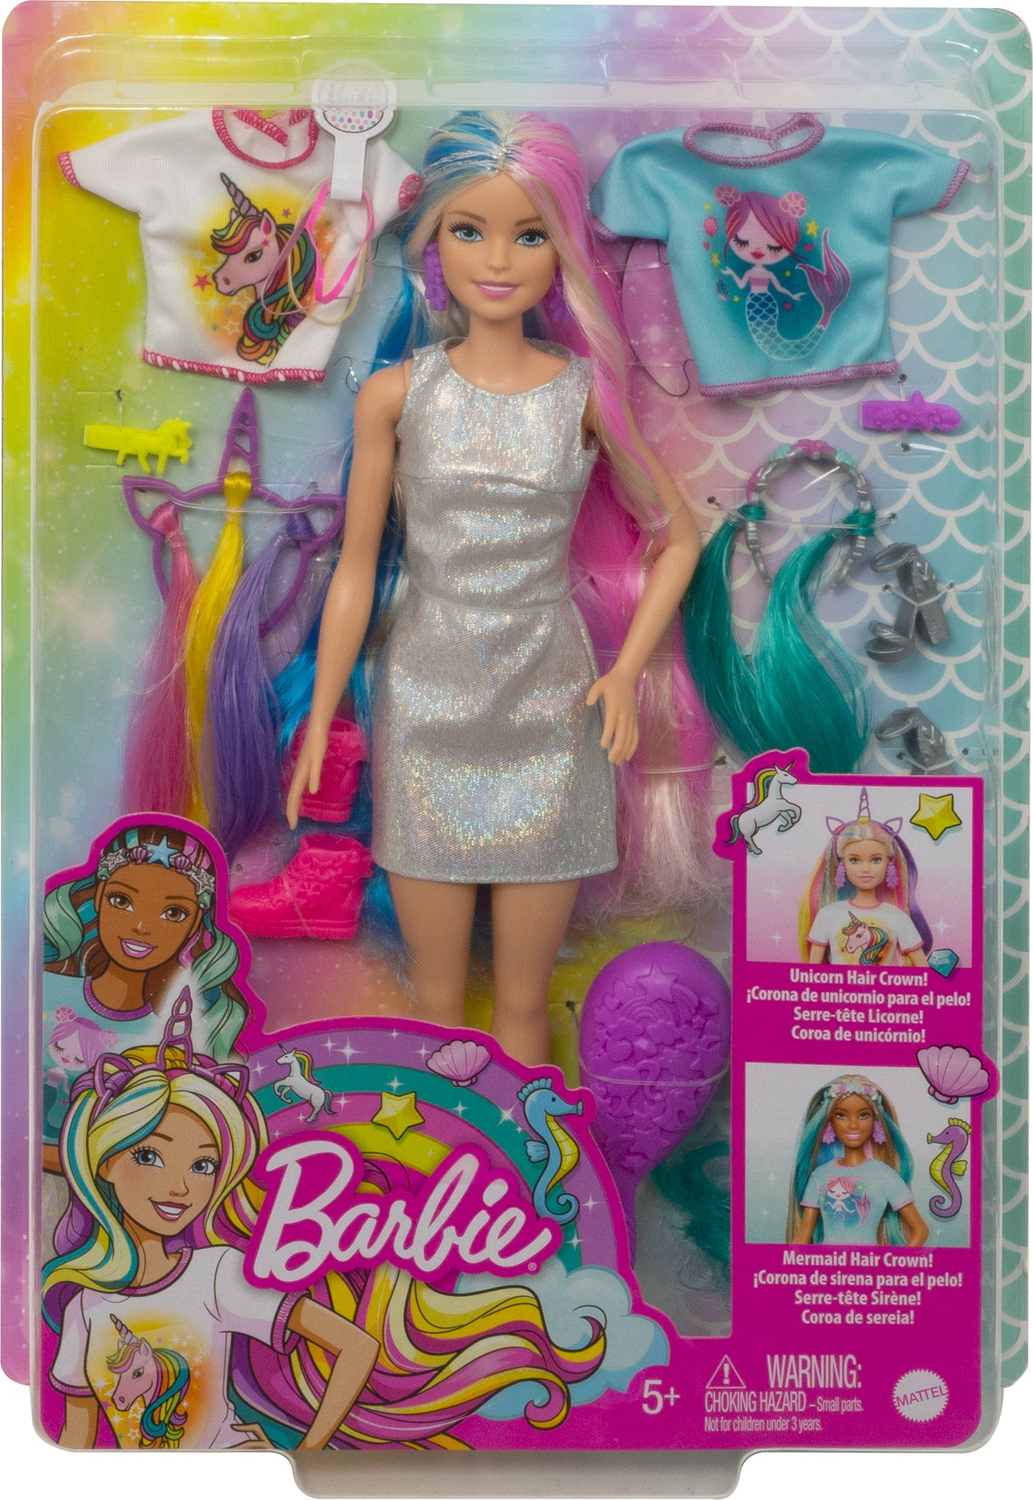 Original Barbie Fantasy Hair Doll Mermaid and Unicorn Looks